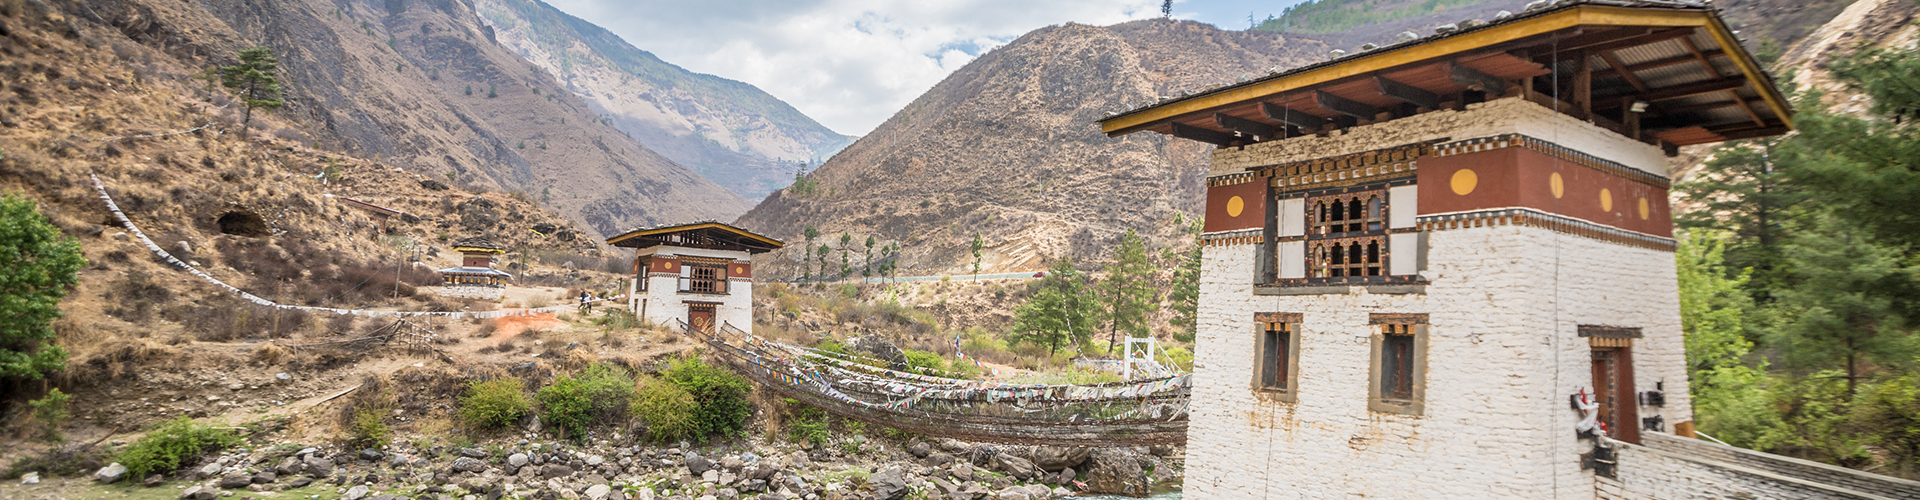 Bhutan tour package from Siliguri